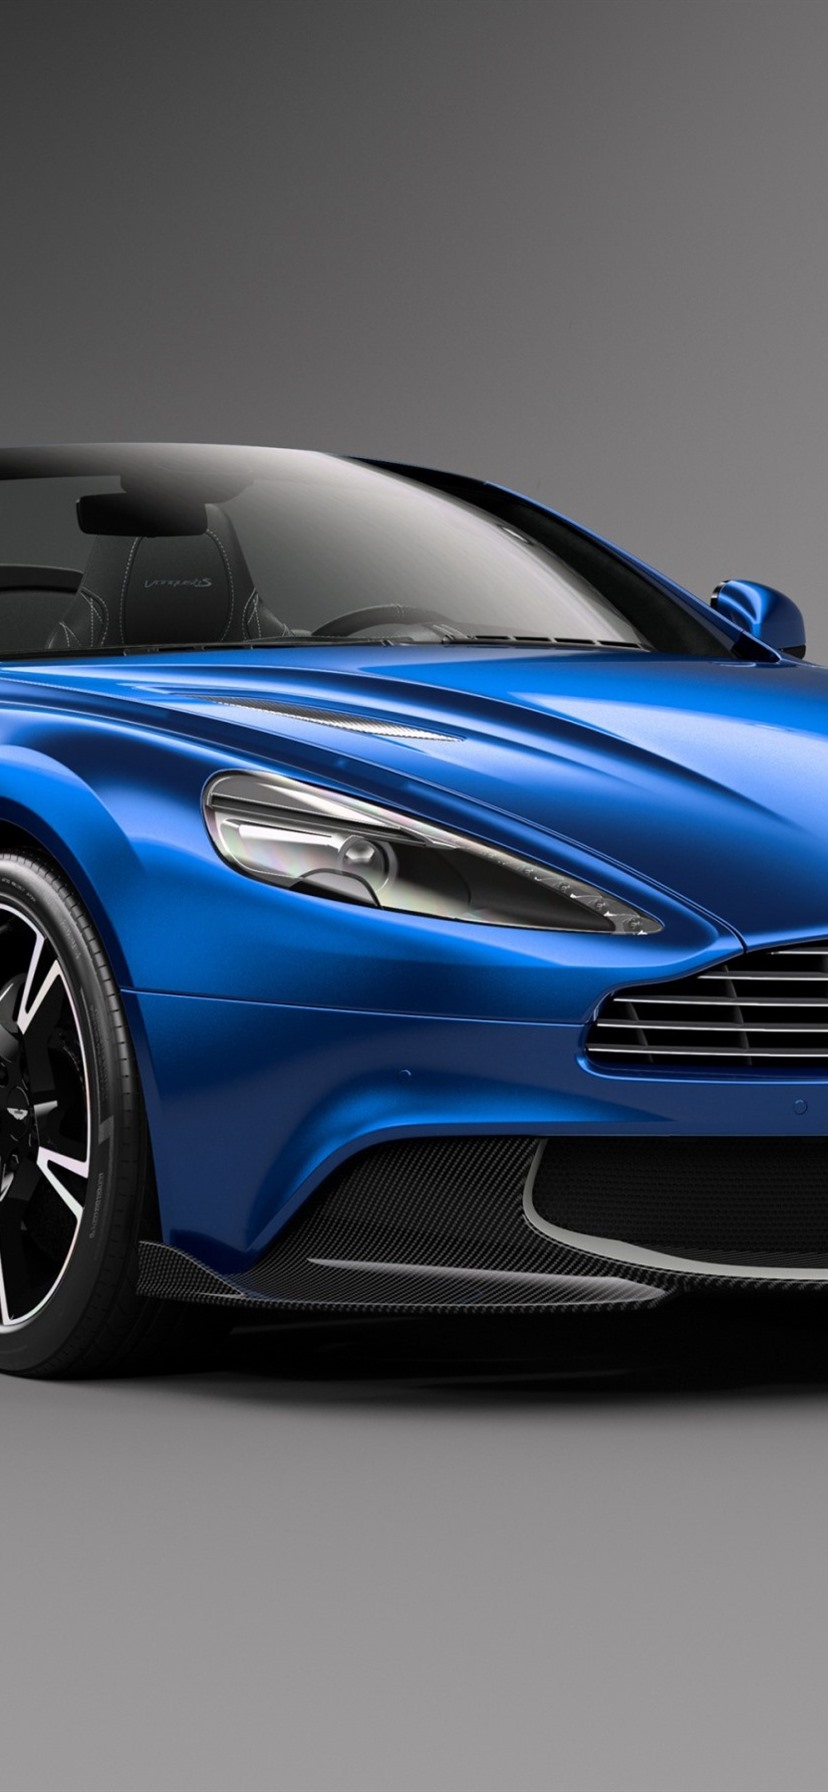 Aston Martin Vanquish 2016 Wallpapers